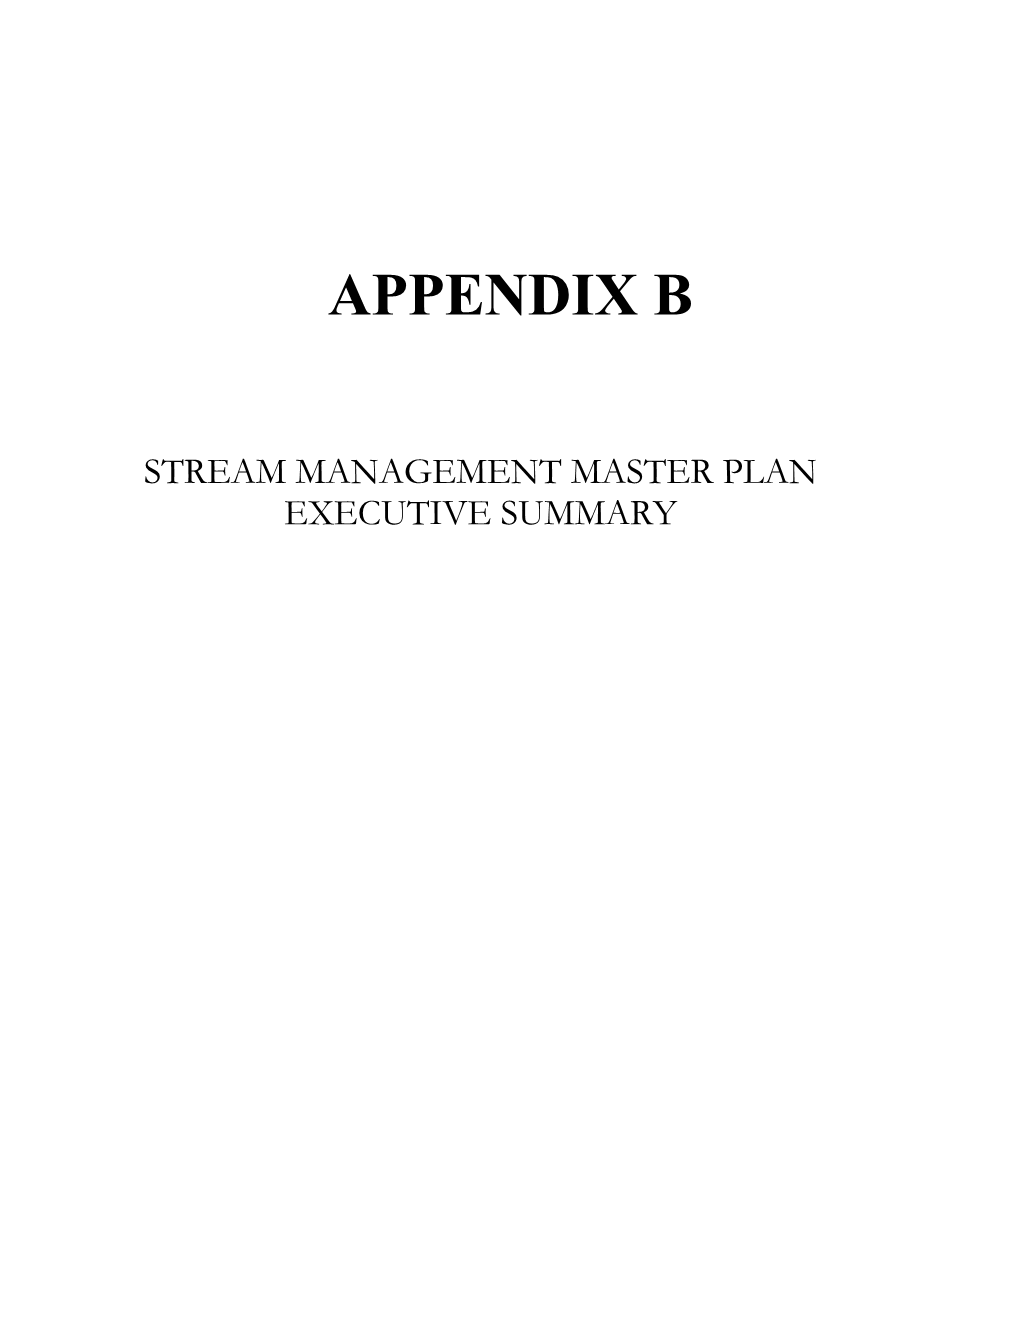 Appendix B (Stream Management Master Plan Summary)